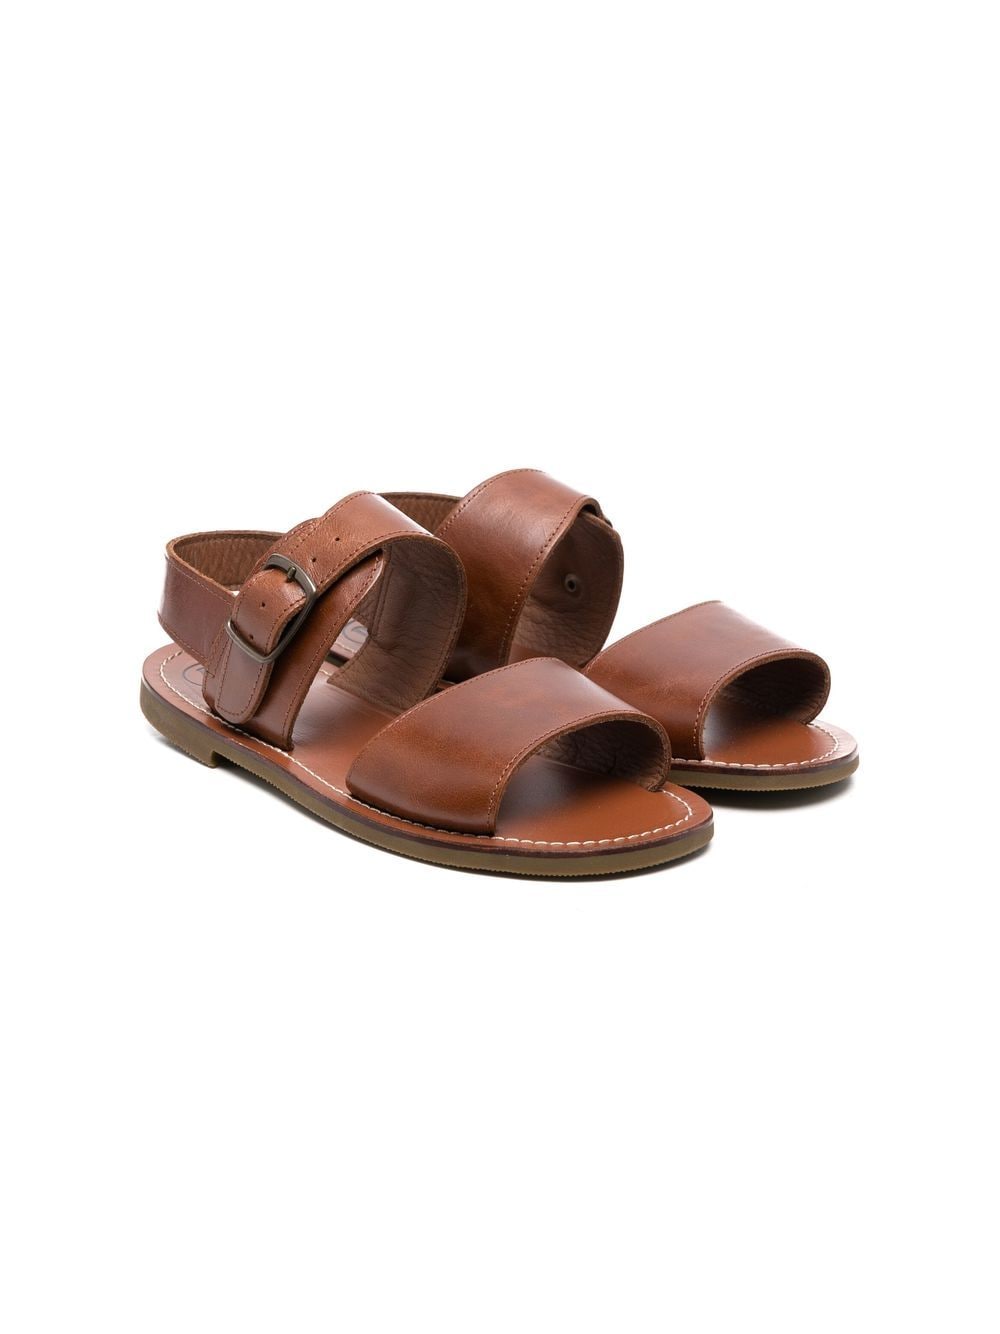 Image 1 of Pèpè buckled leather sandals